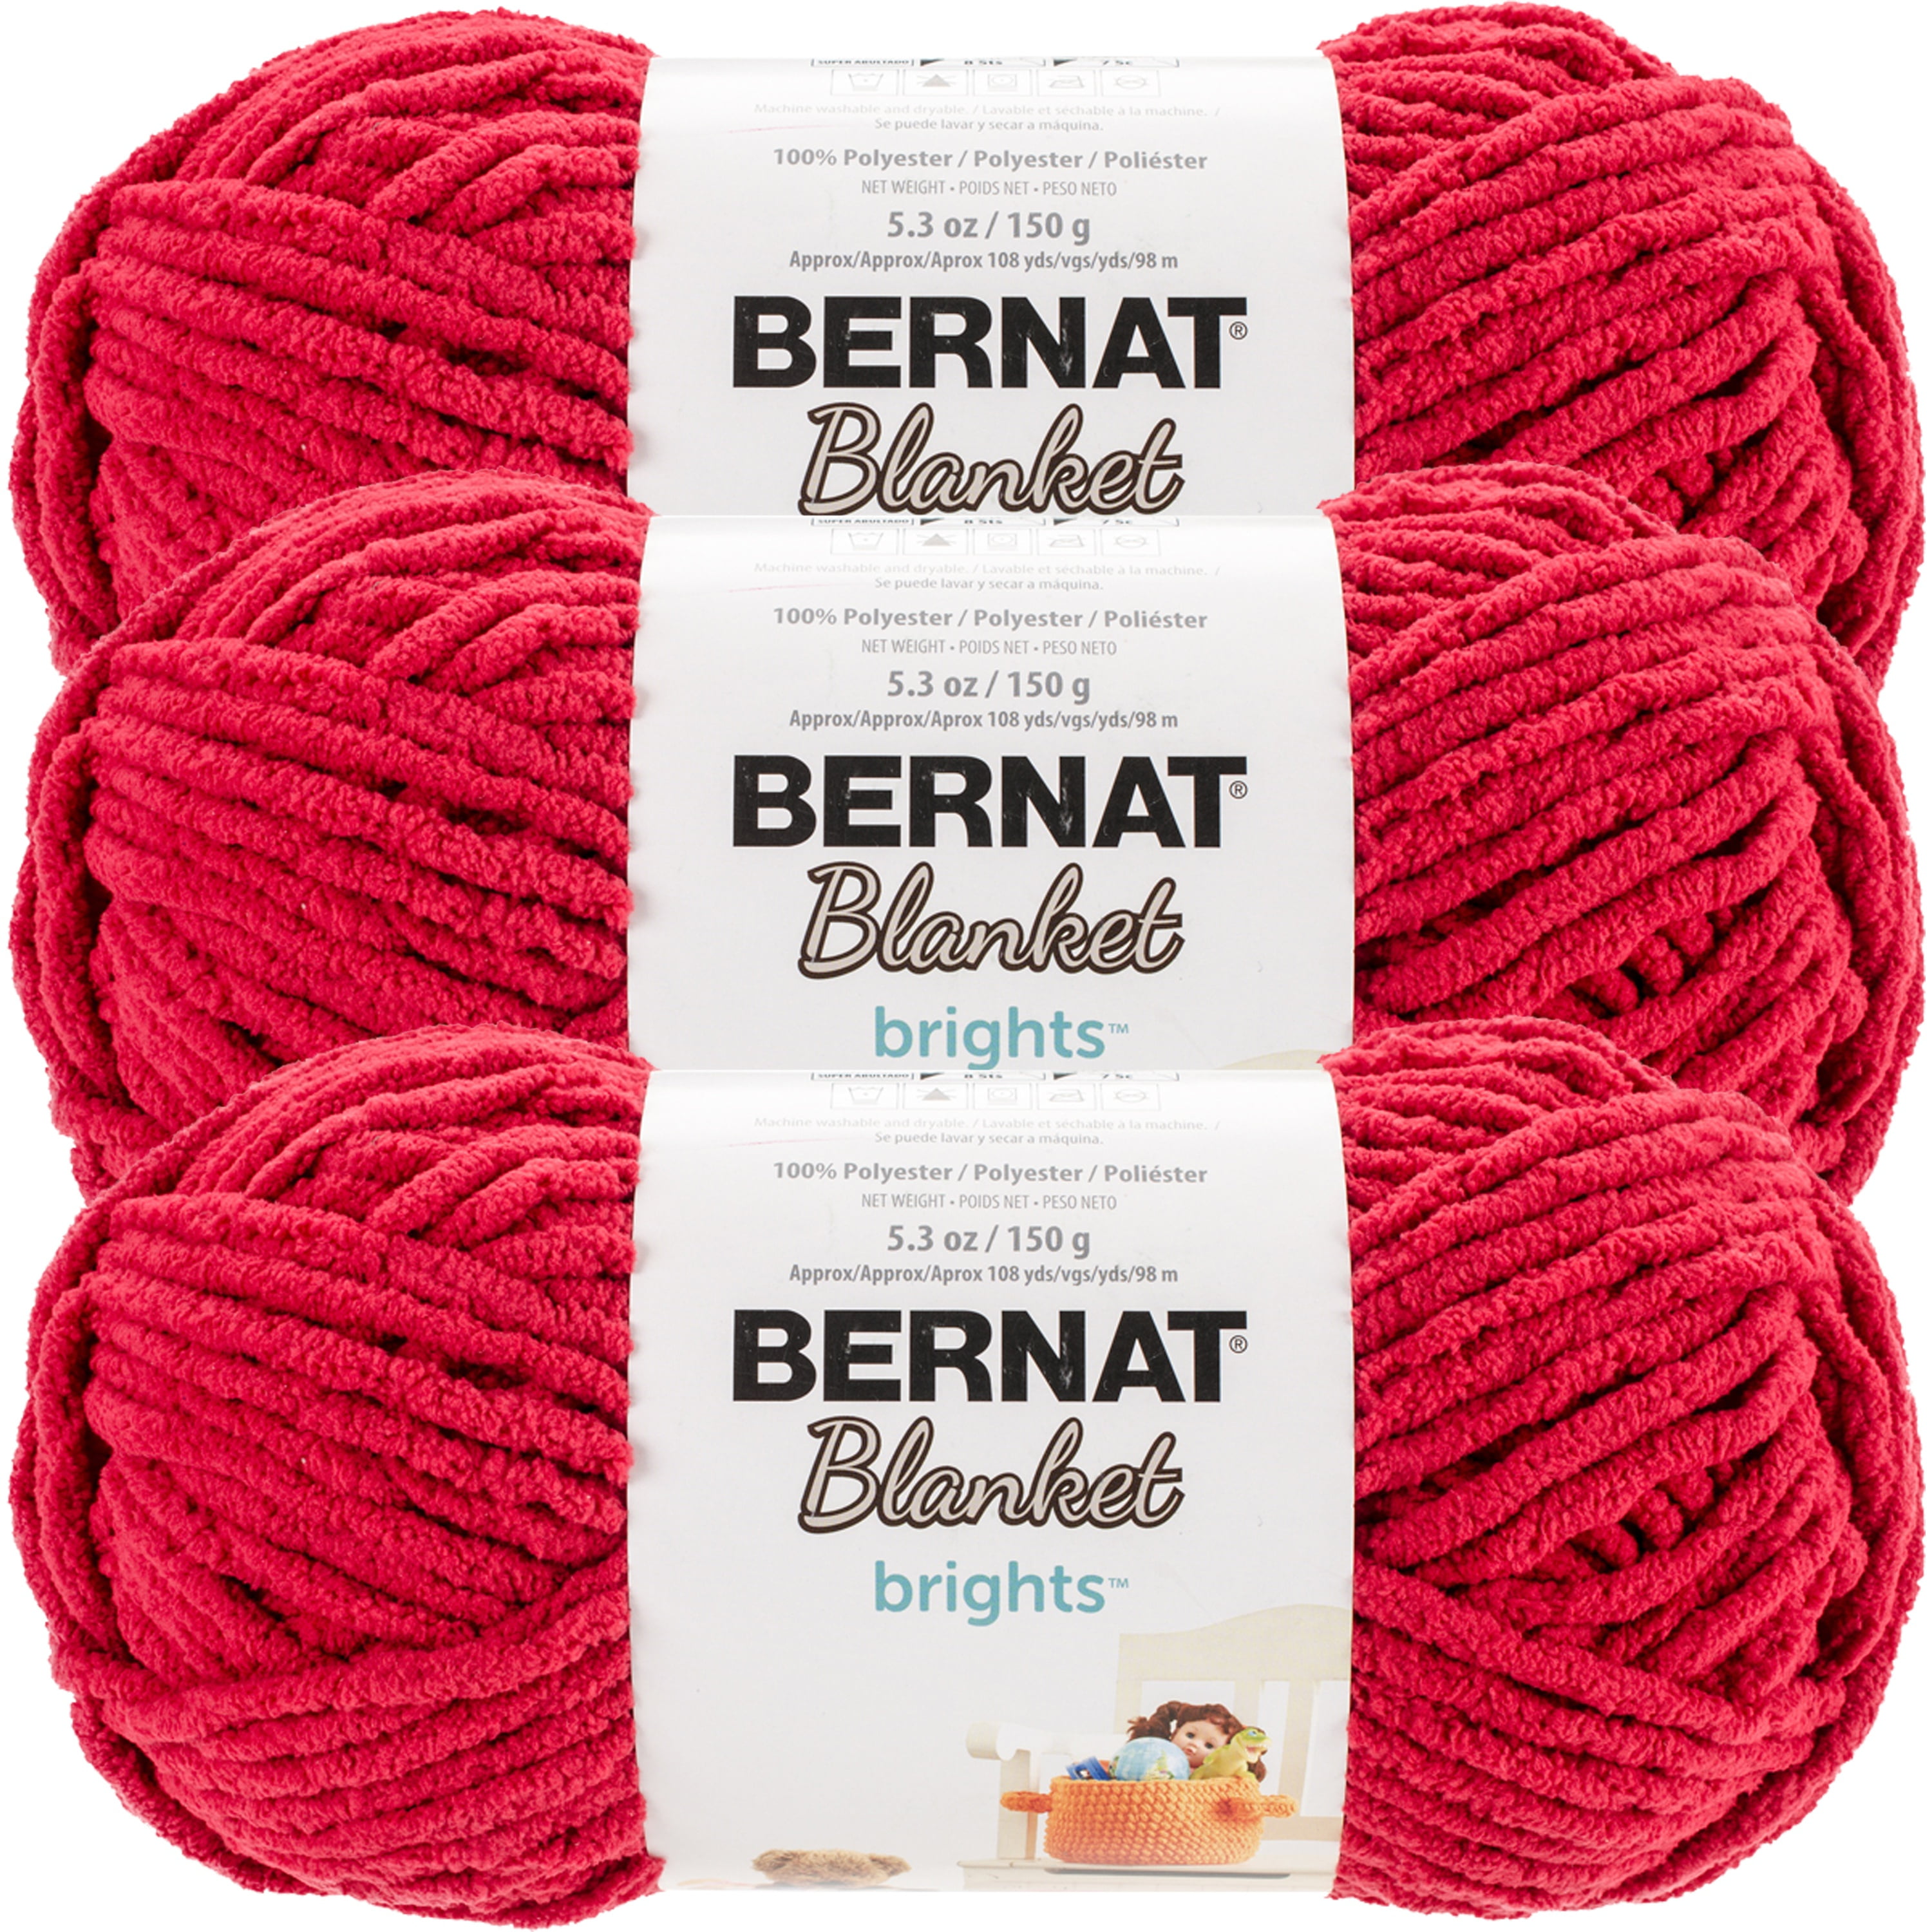 Bernat Blanket Brights Big Ball Yarn-Racecar Red, 1 count - Fred Meyer